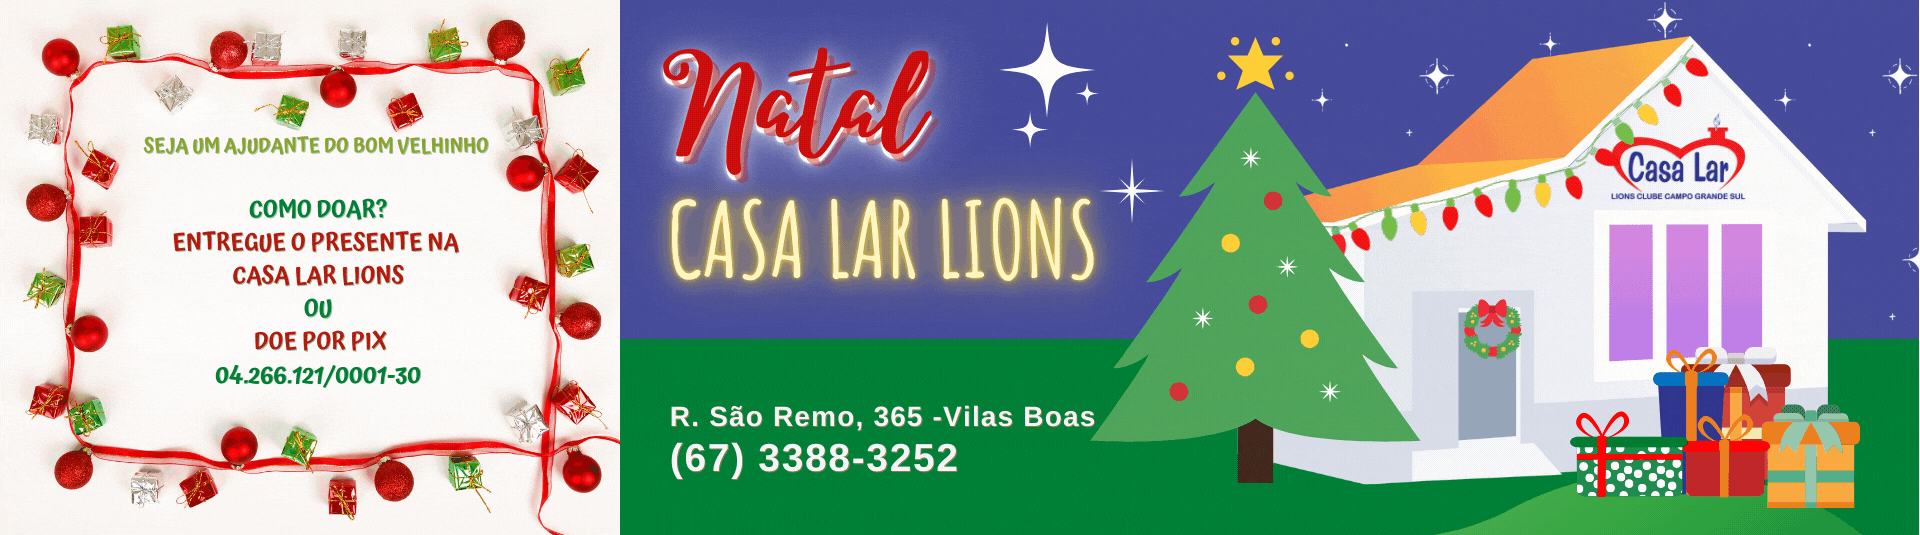 Campanha Natal Casa Lar Lions - 2021